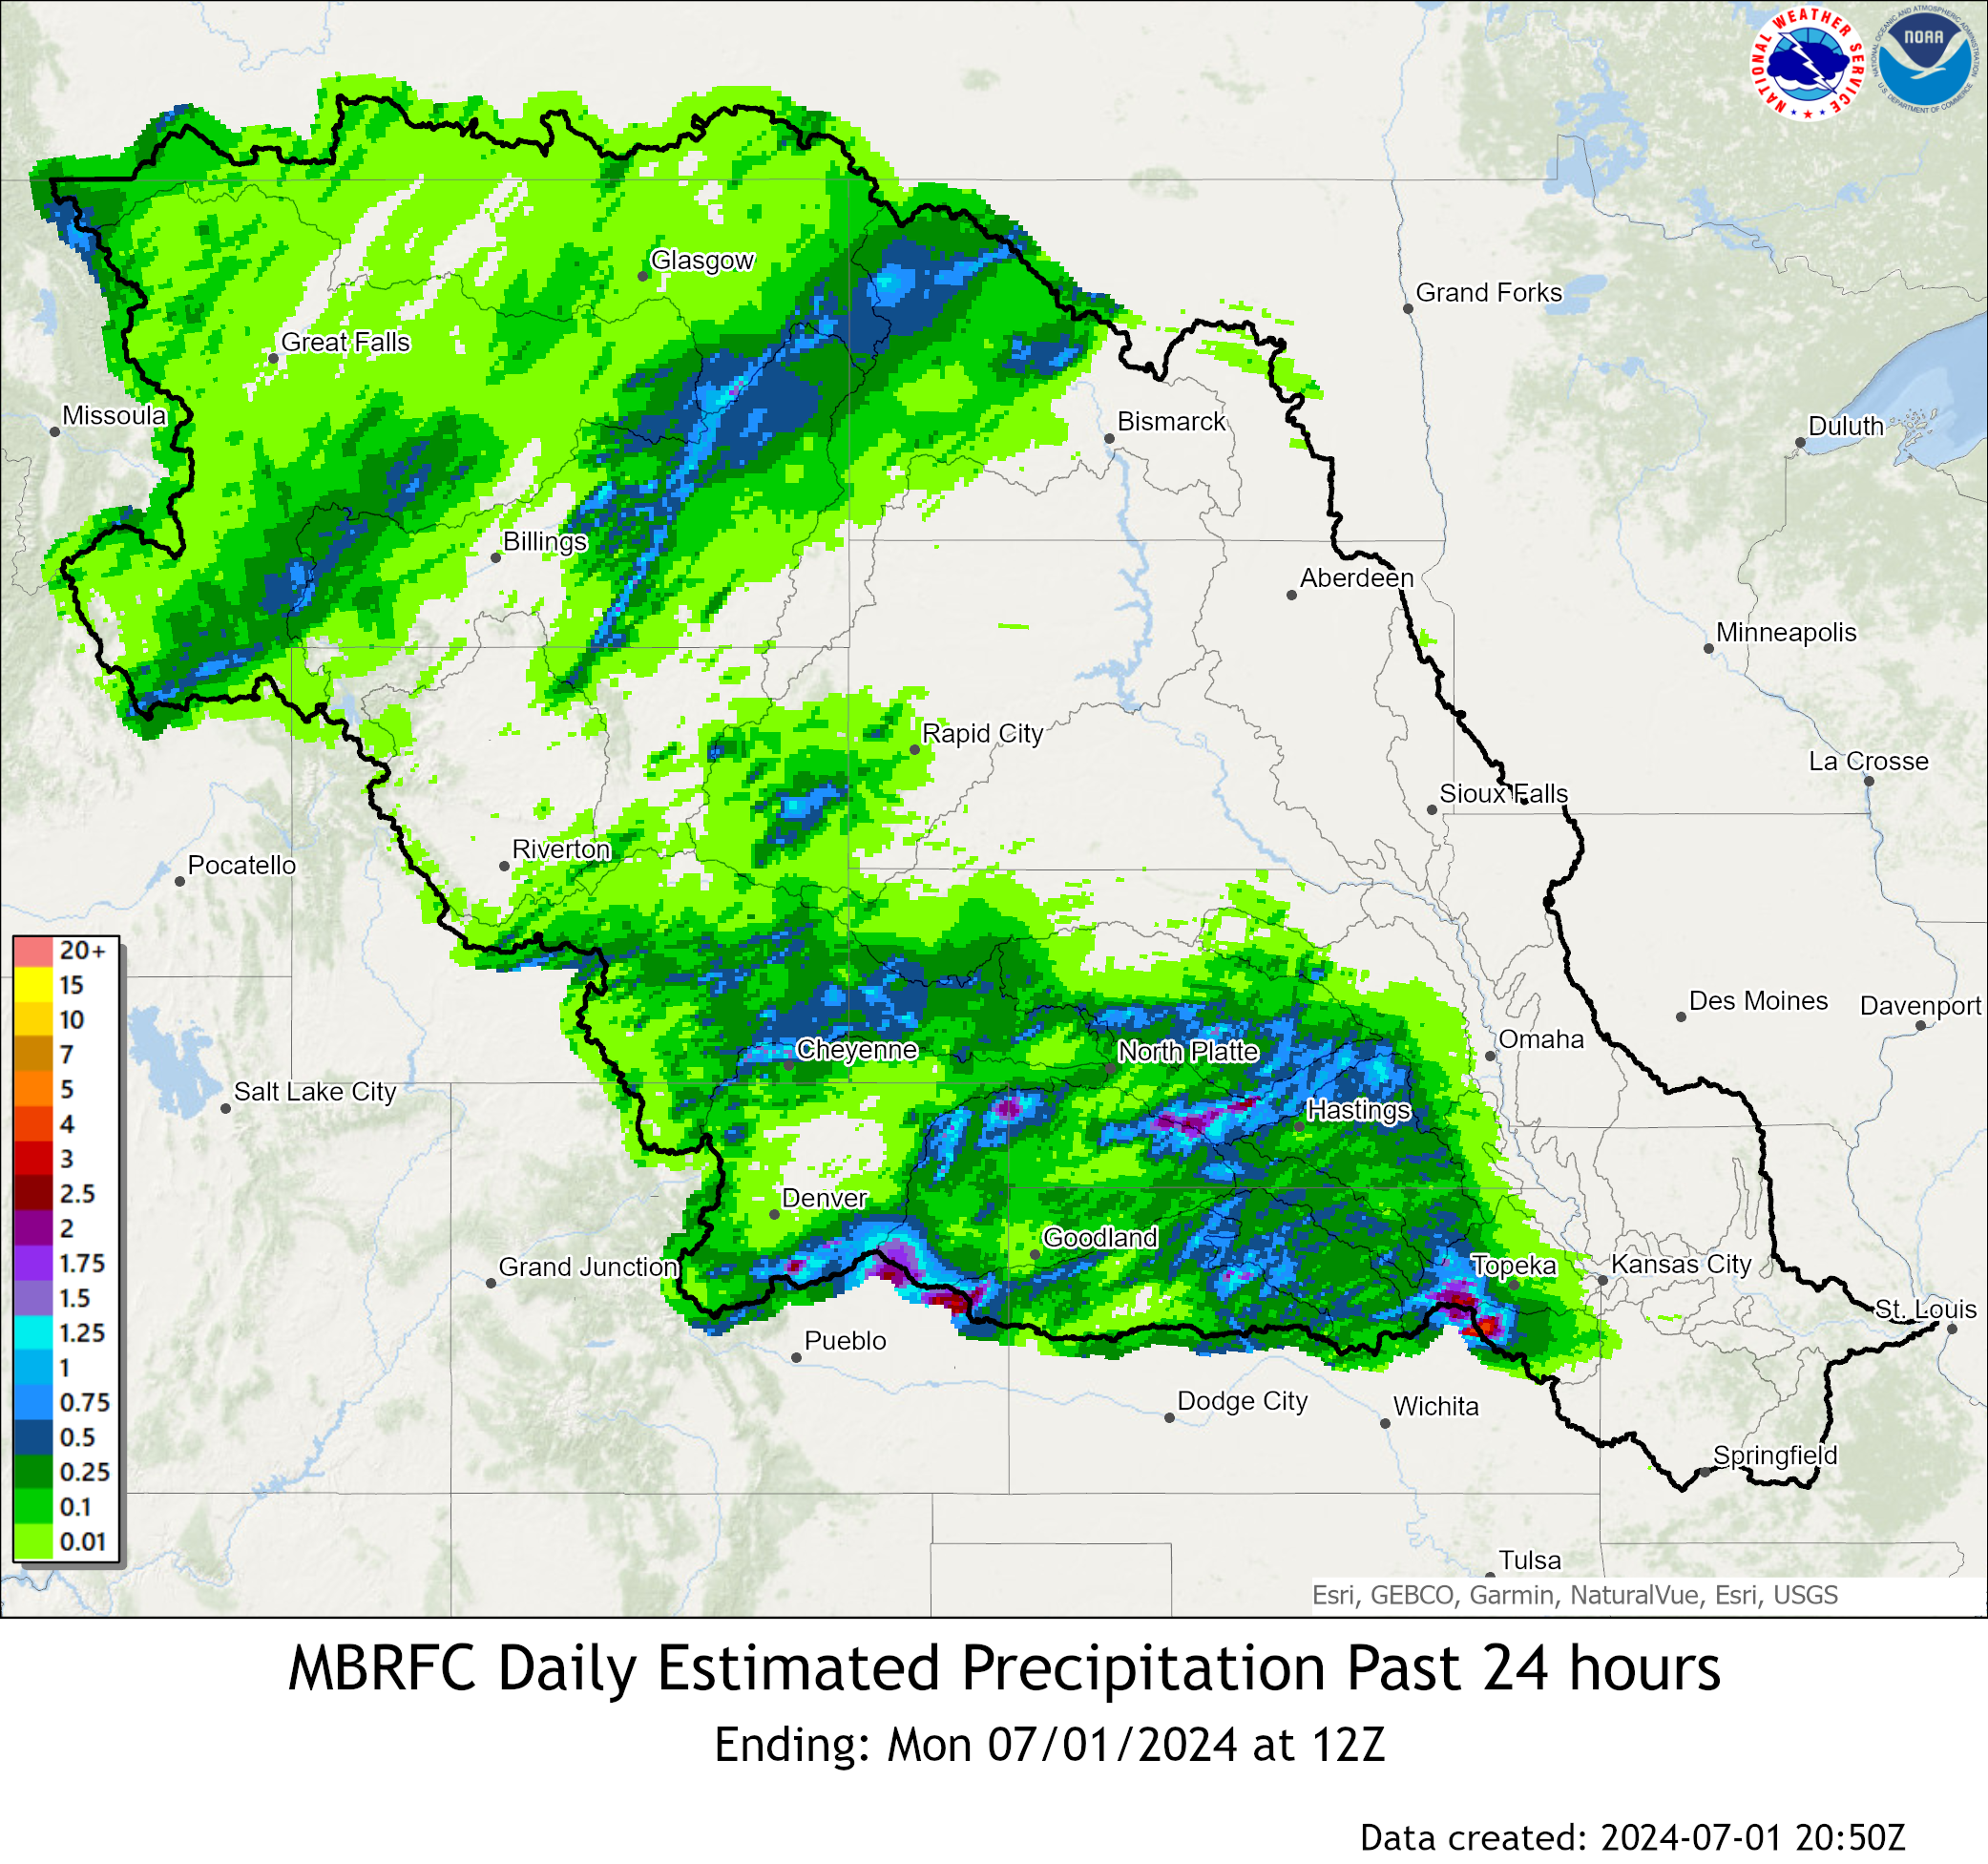 Missouri RIver Basin Precipitation